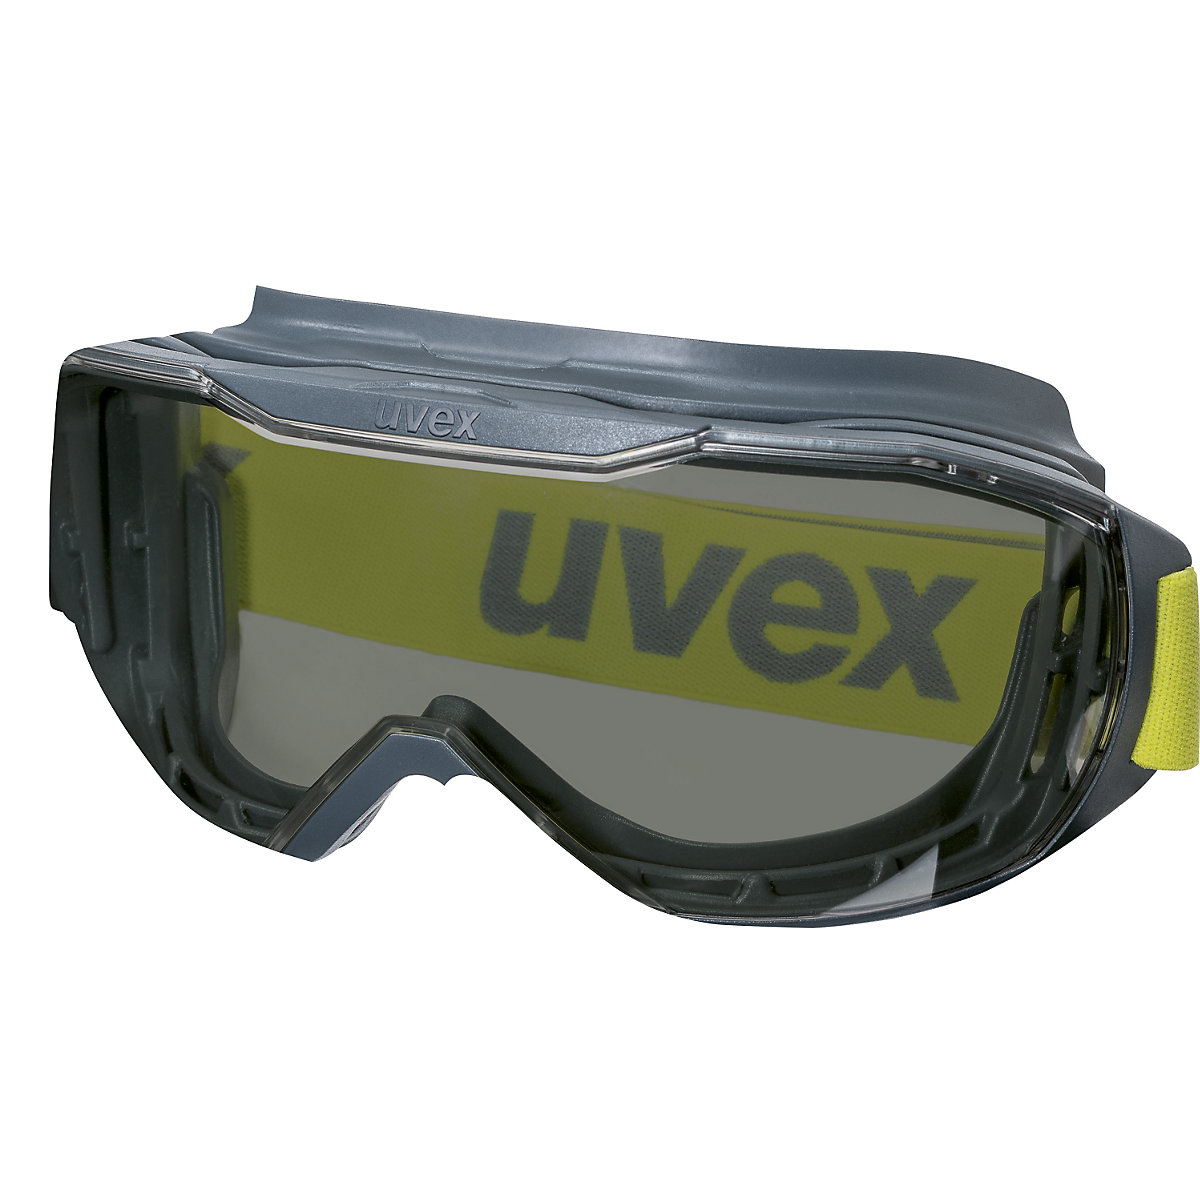 Velike zaštitne naočale megasonic – Uvex